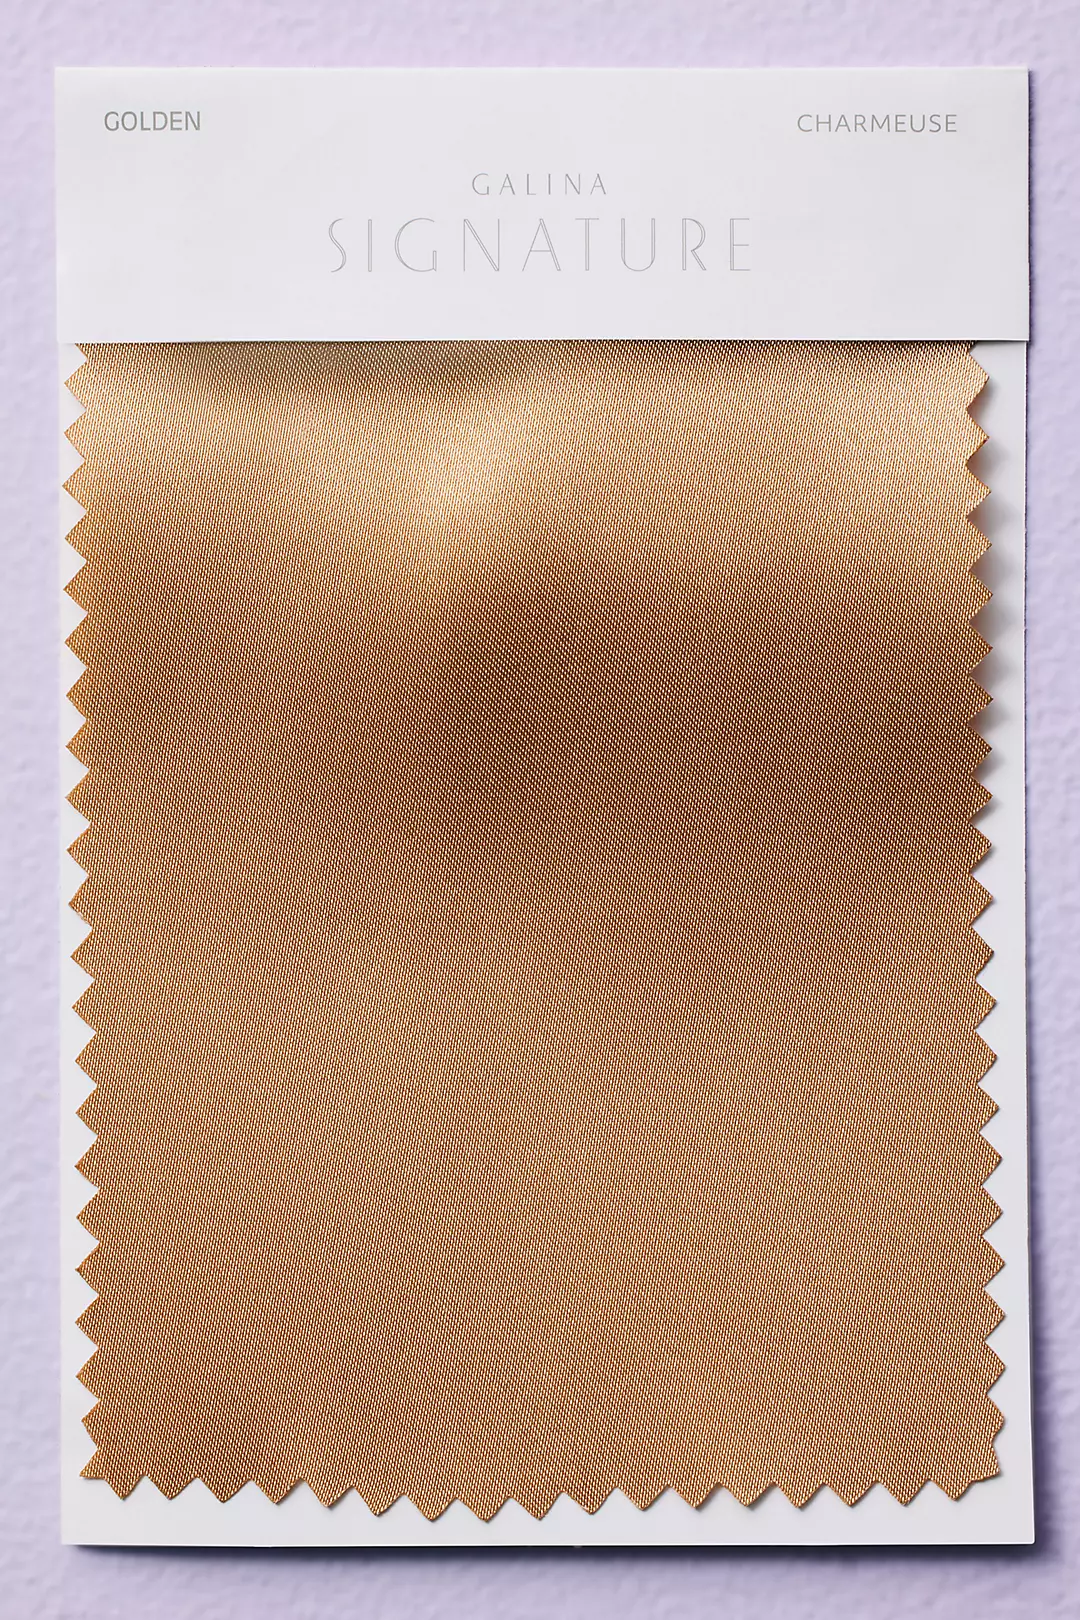 Golden Fabric Swatch Image